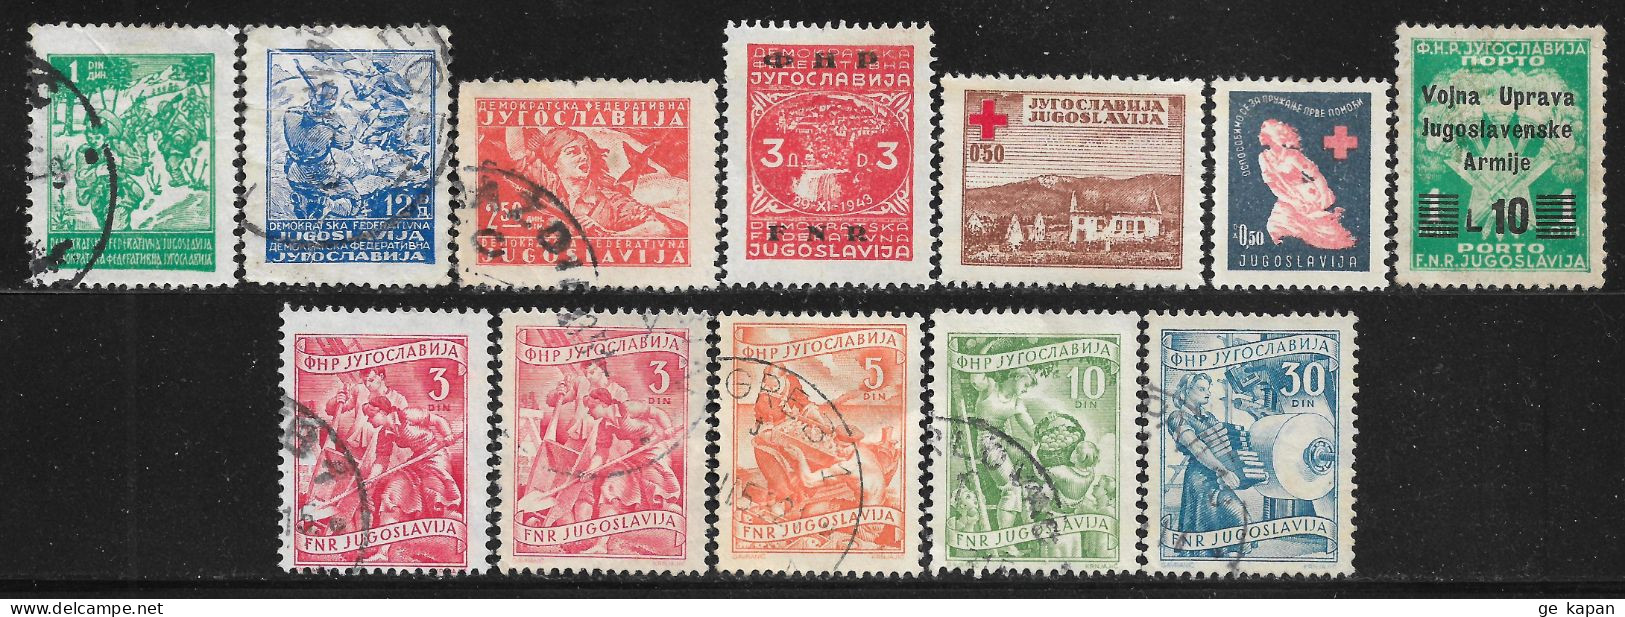 1945-1952 YUGOSLAVIA Set Of 8 Used + 4 MLH Stamps (Scott # 174,182,211,277,RA5,RA6,J23,308,345,346,350) CV $3.00 - Gebruikt